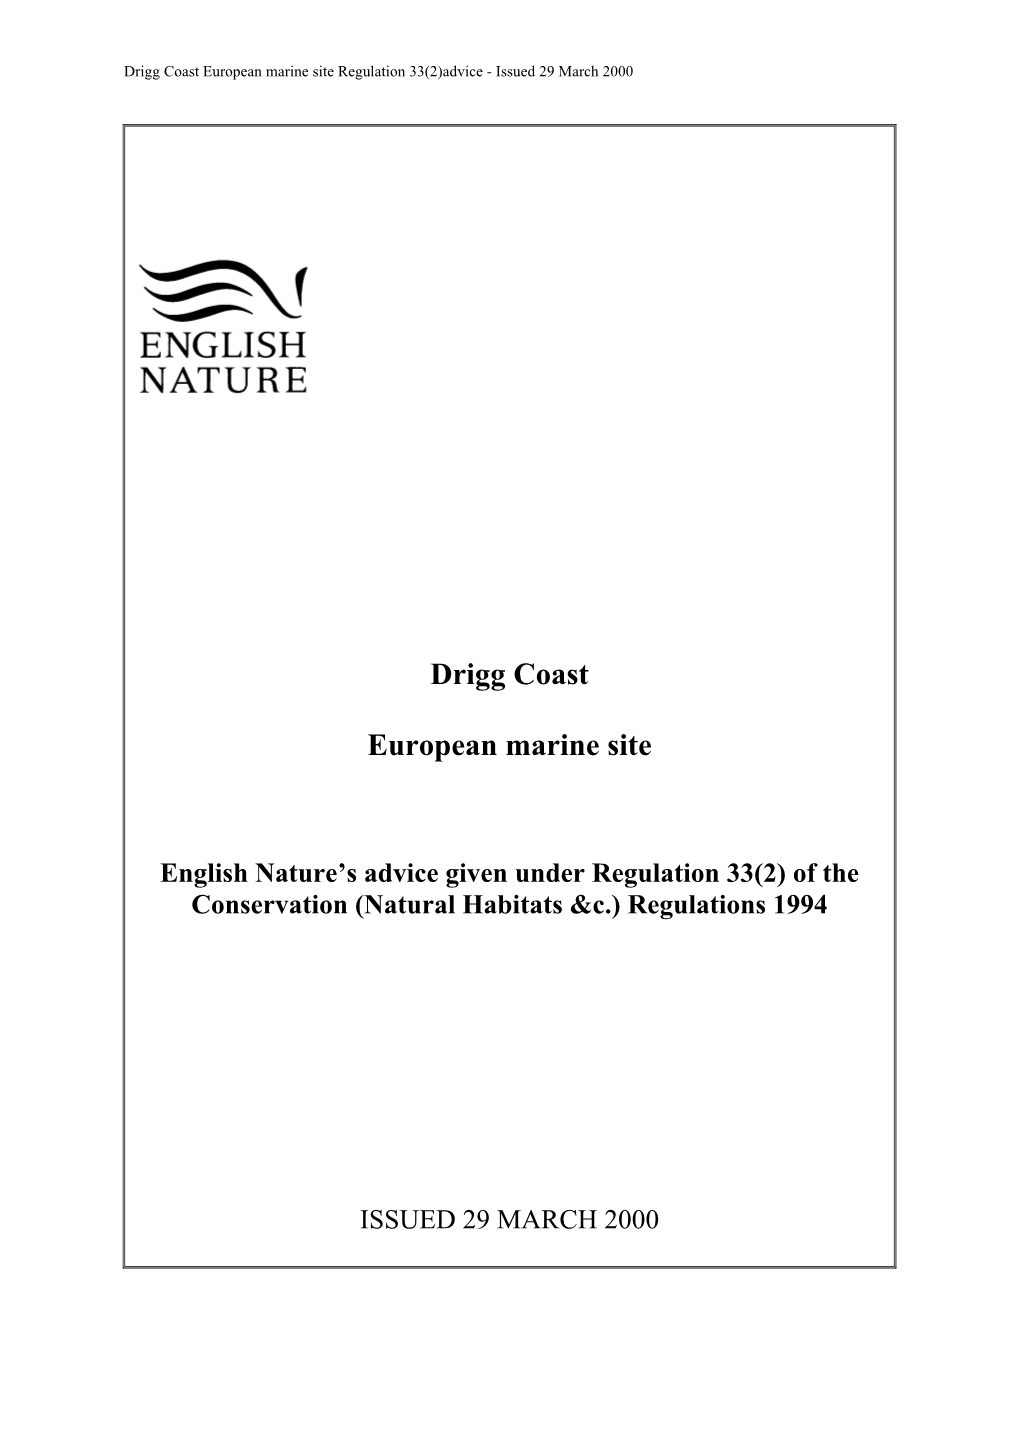 Drigg Coast European Marine Site Regulation 33(2)Advice - Issued 29 March 2000